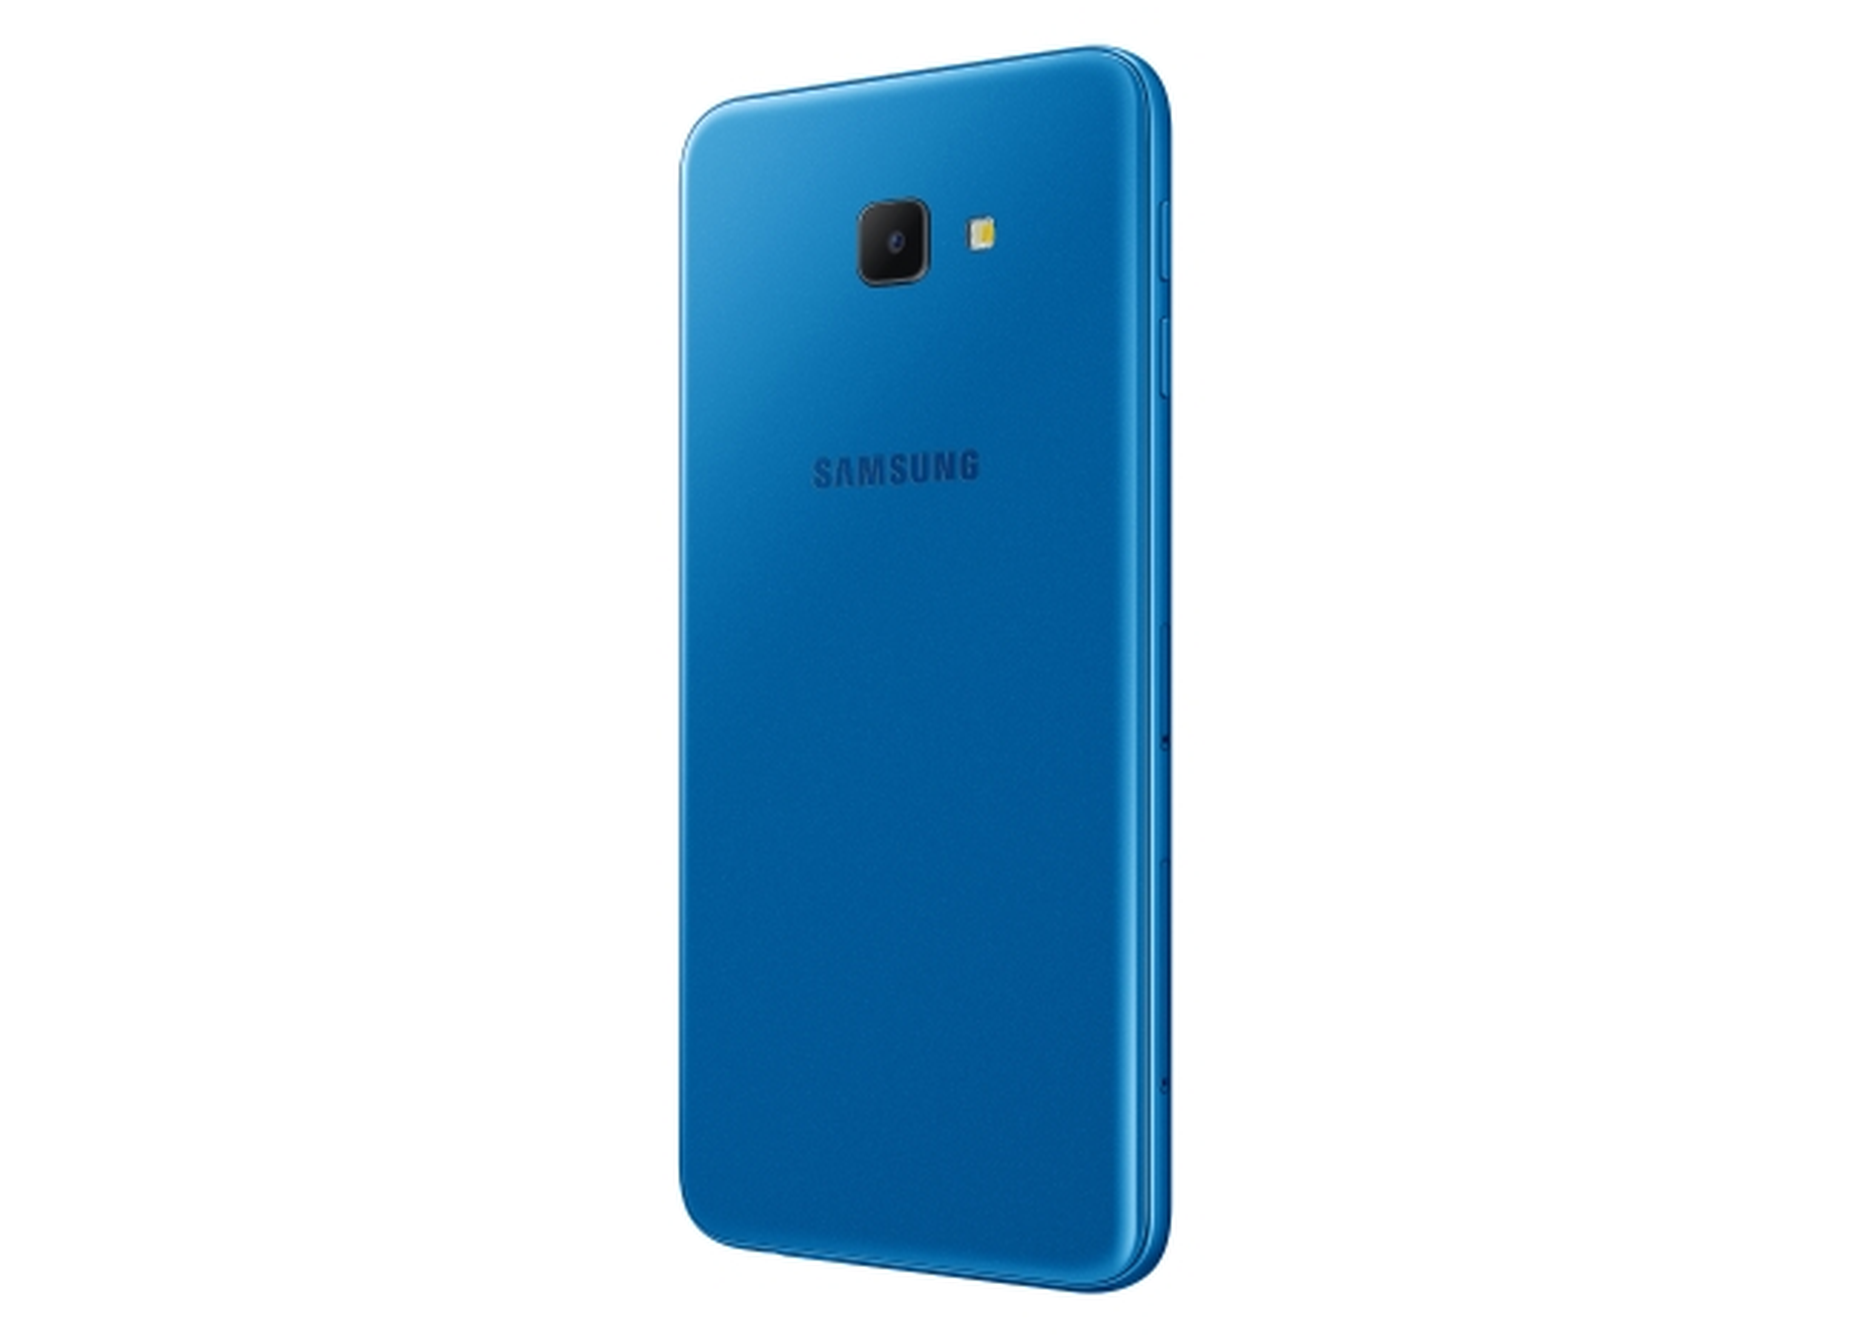 Samsung Galaxy J4 Core specs